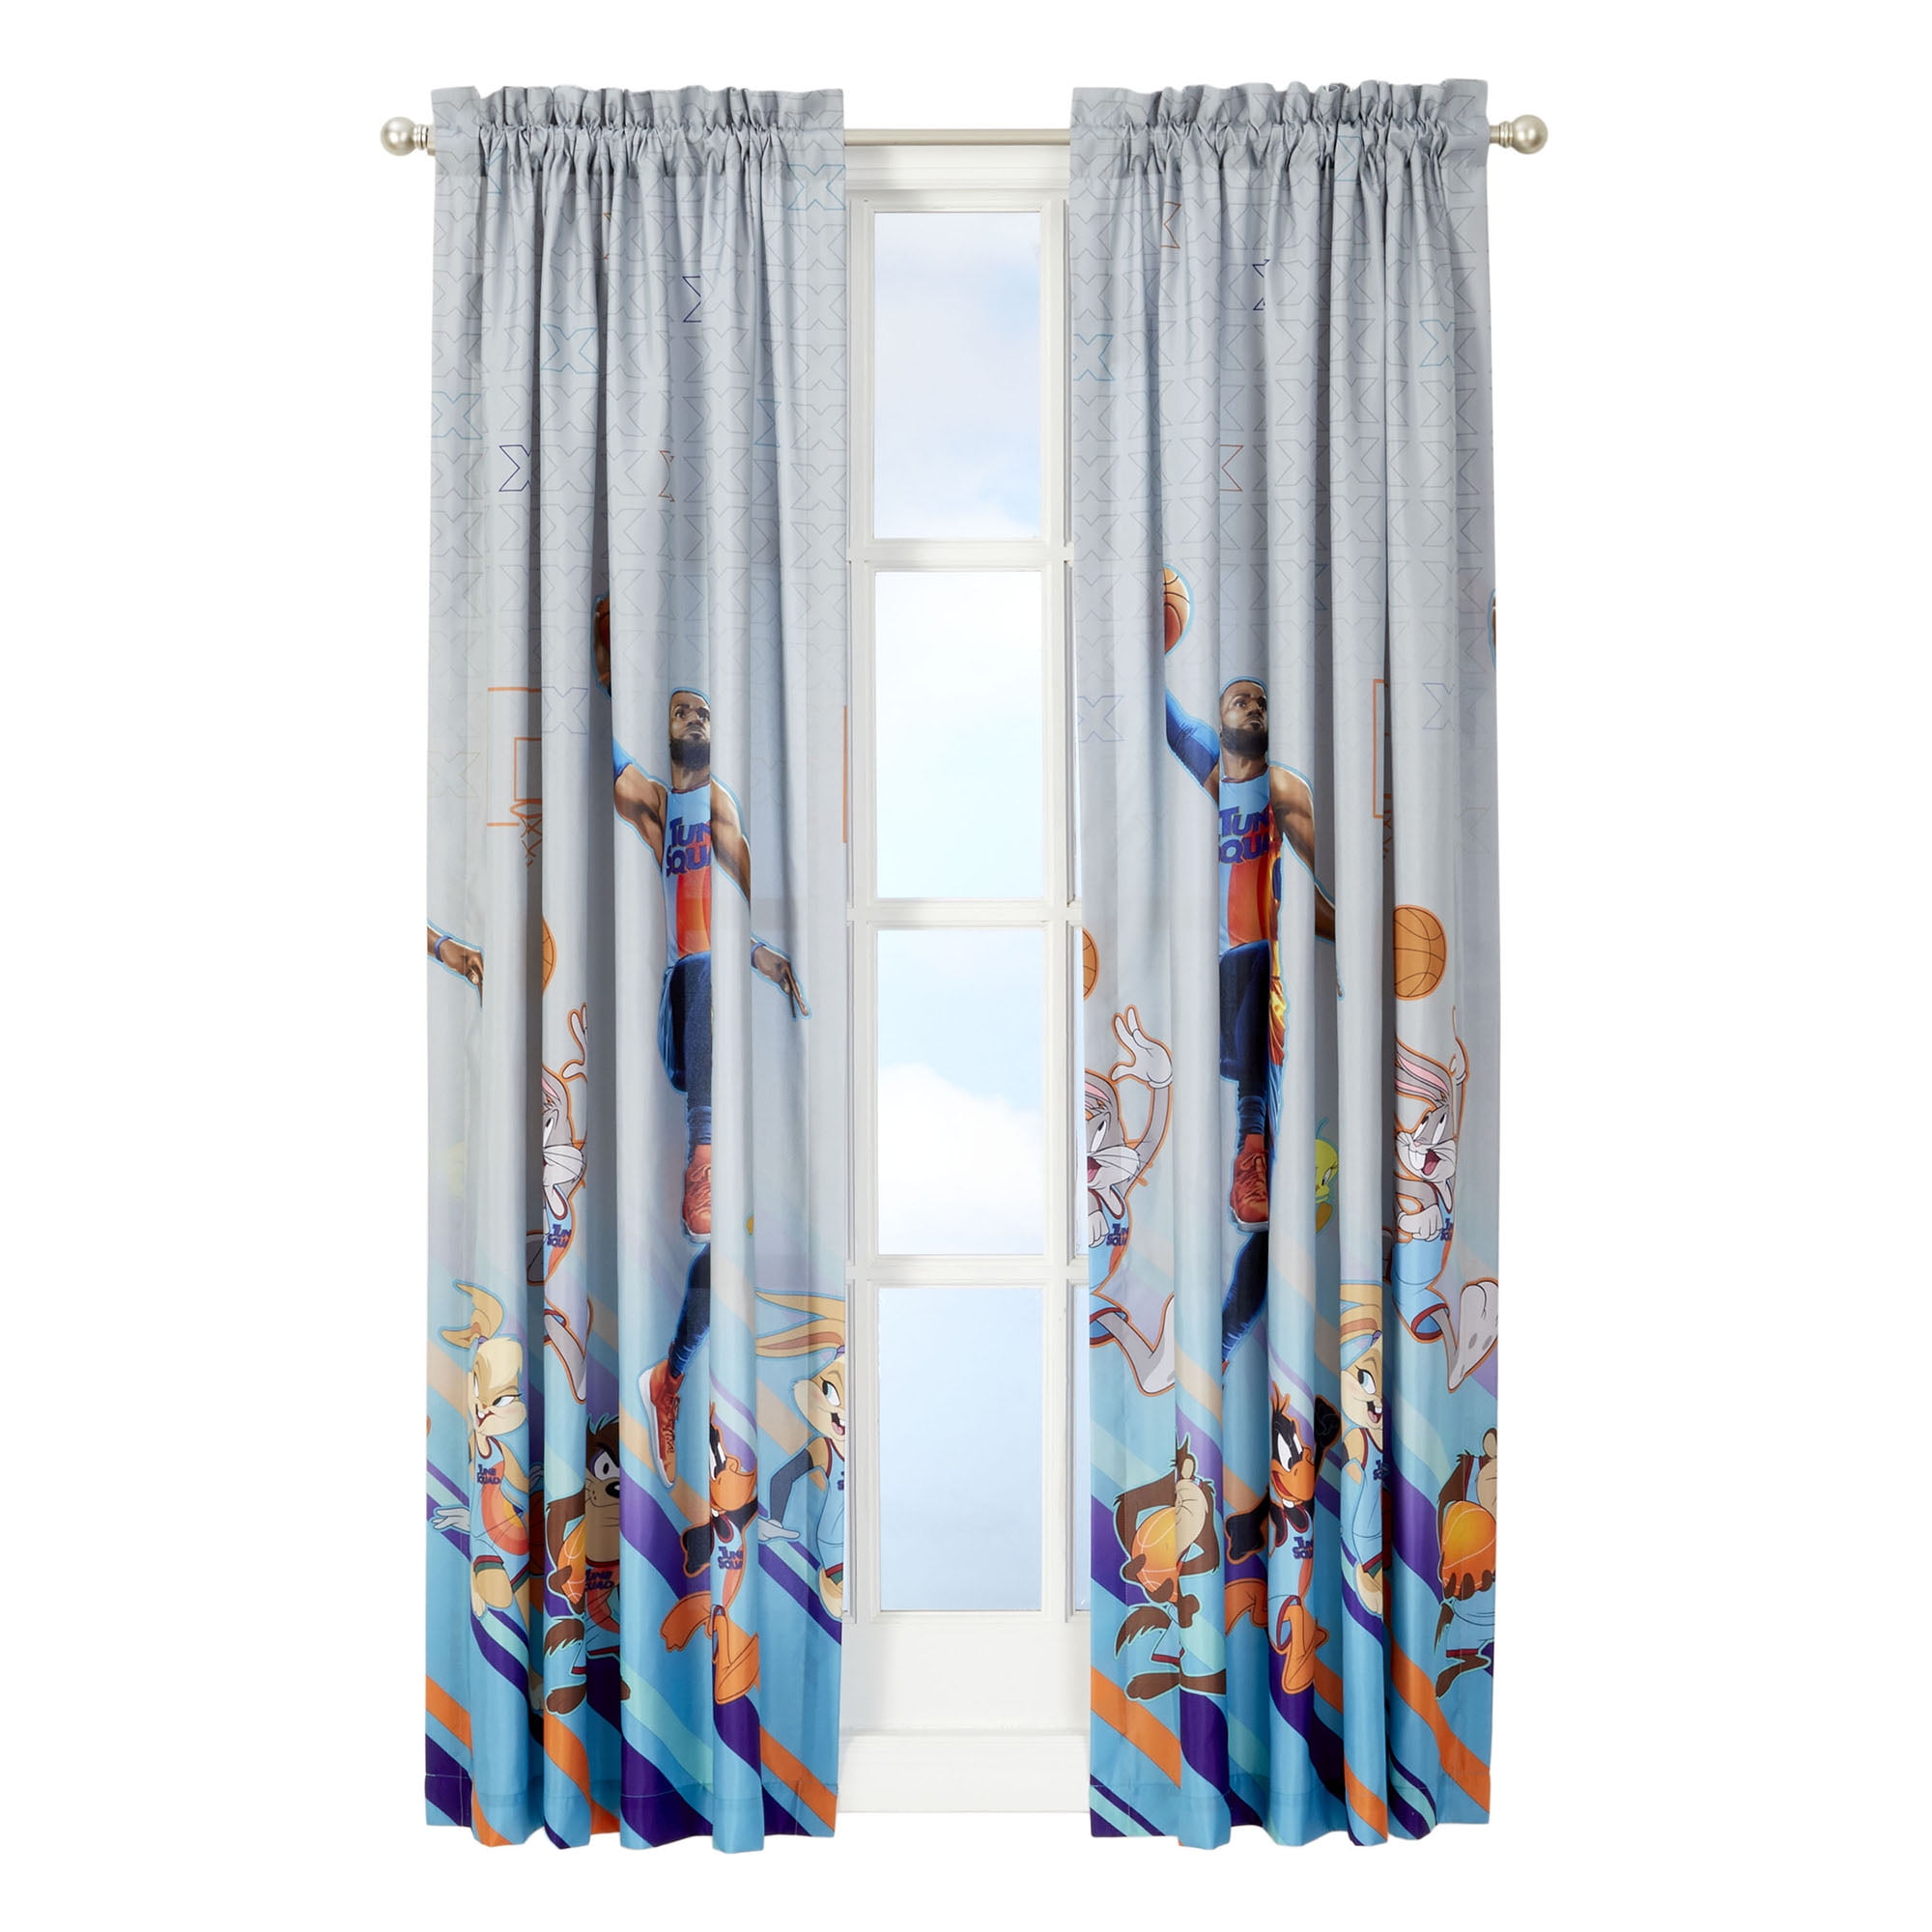 Space Jam Kids Bedroom Window Curtains, 2 Panel Set, 63inch Length, Gray